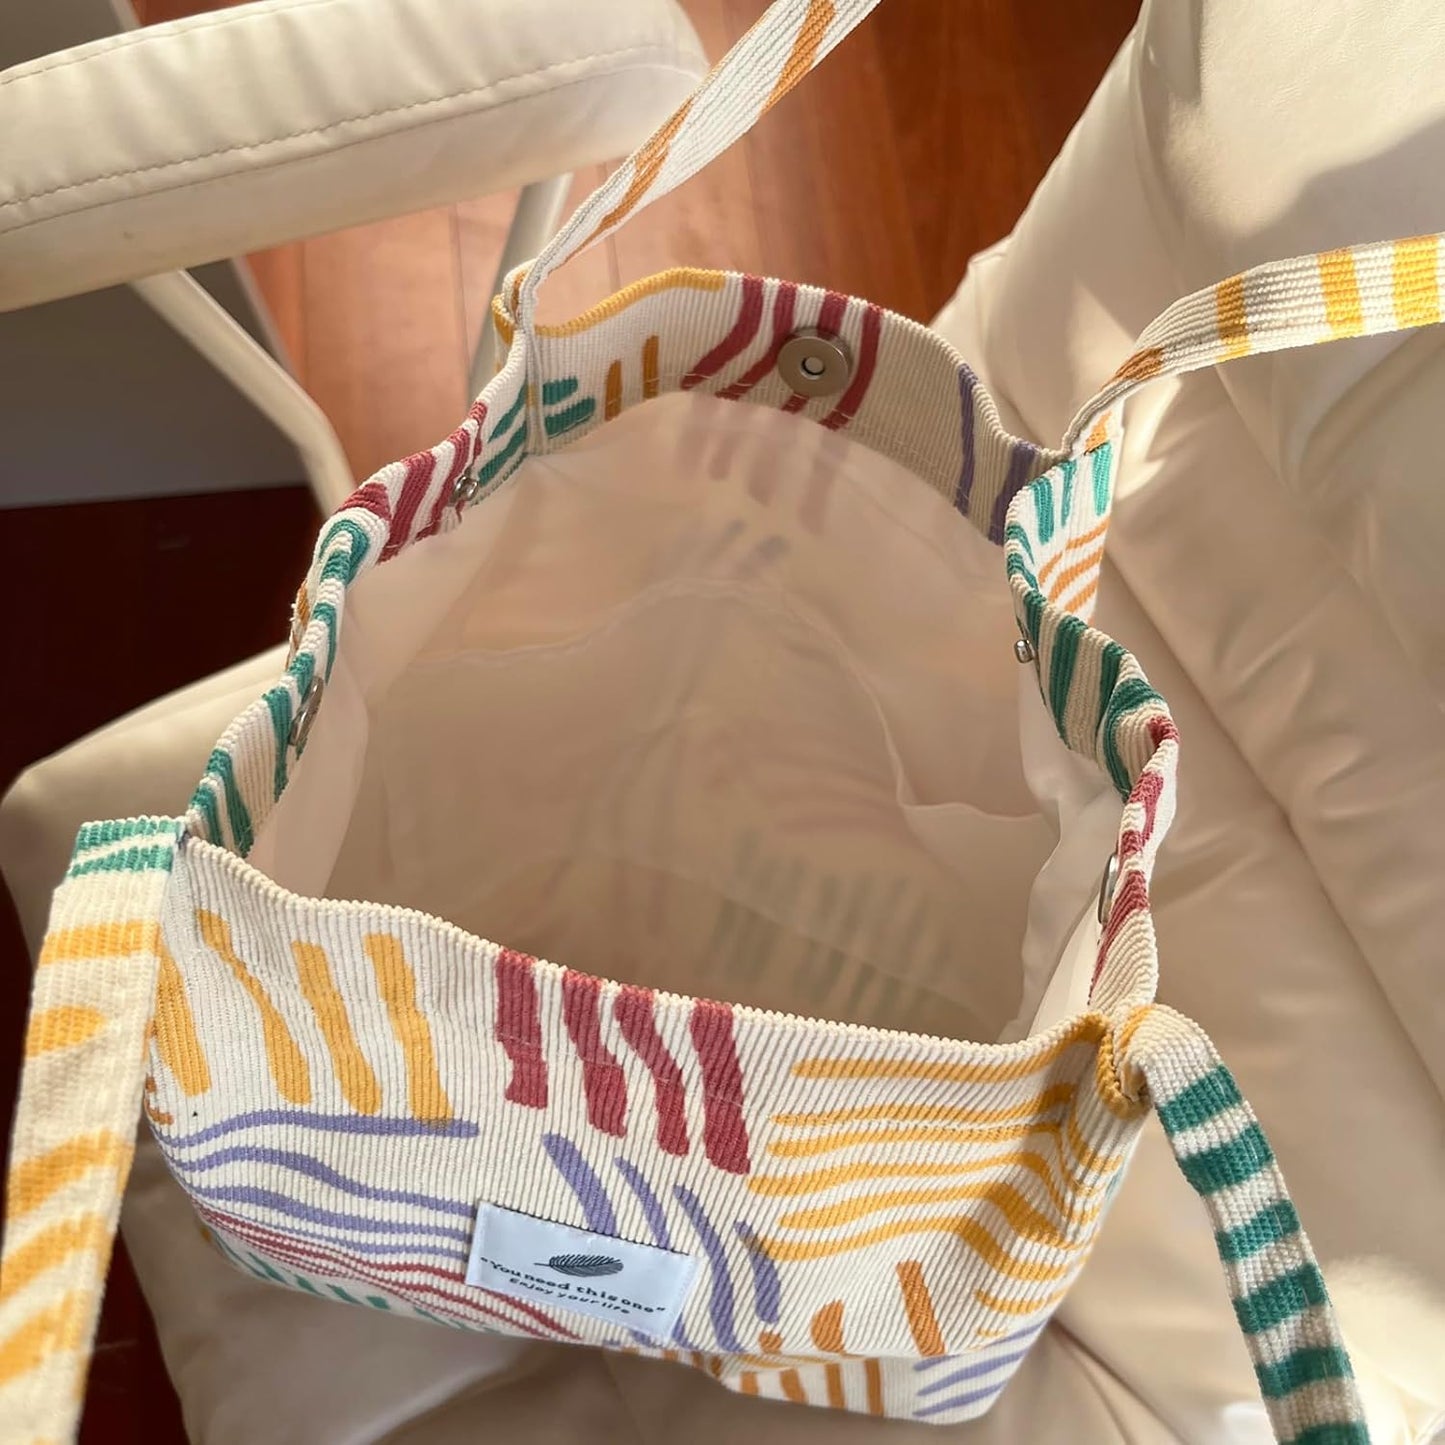 Colourful Striped Corduroy Tote Bag